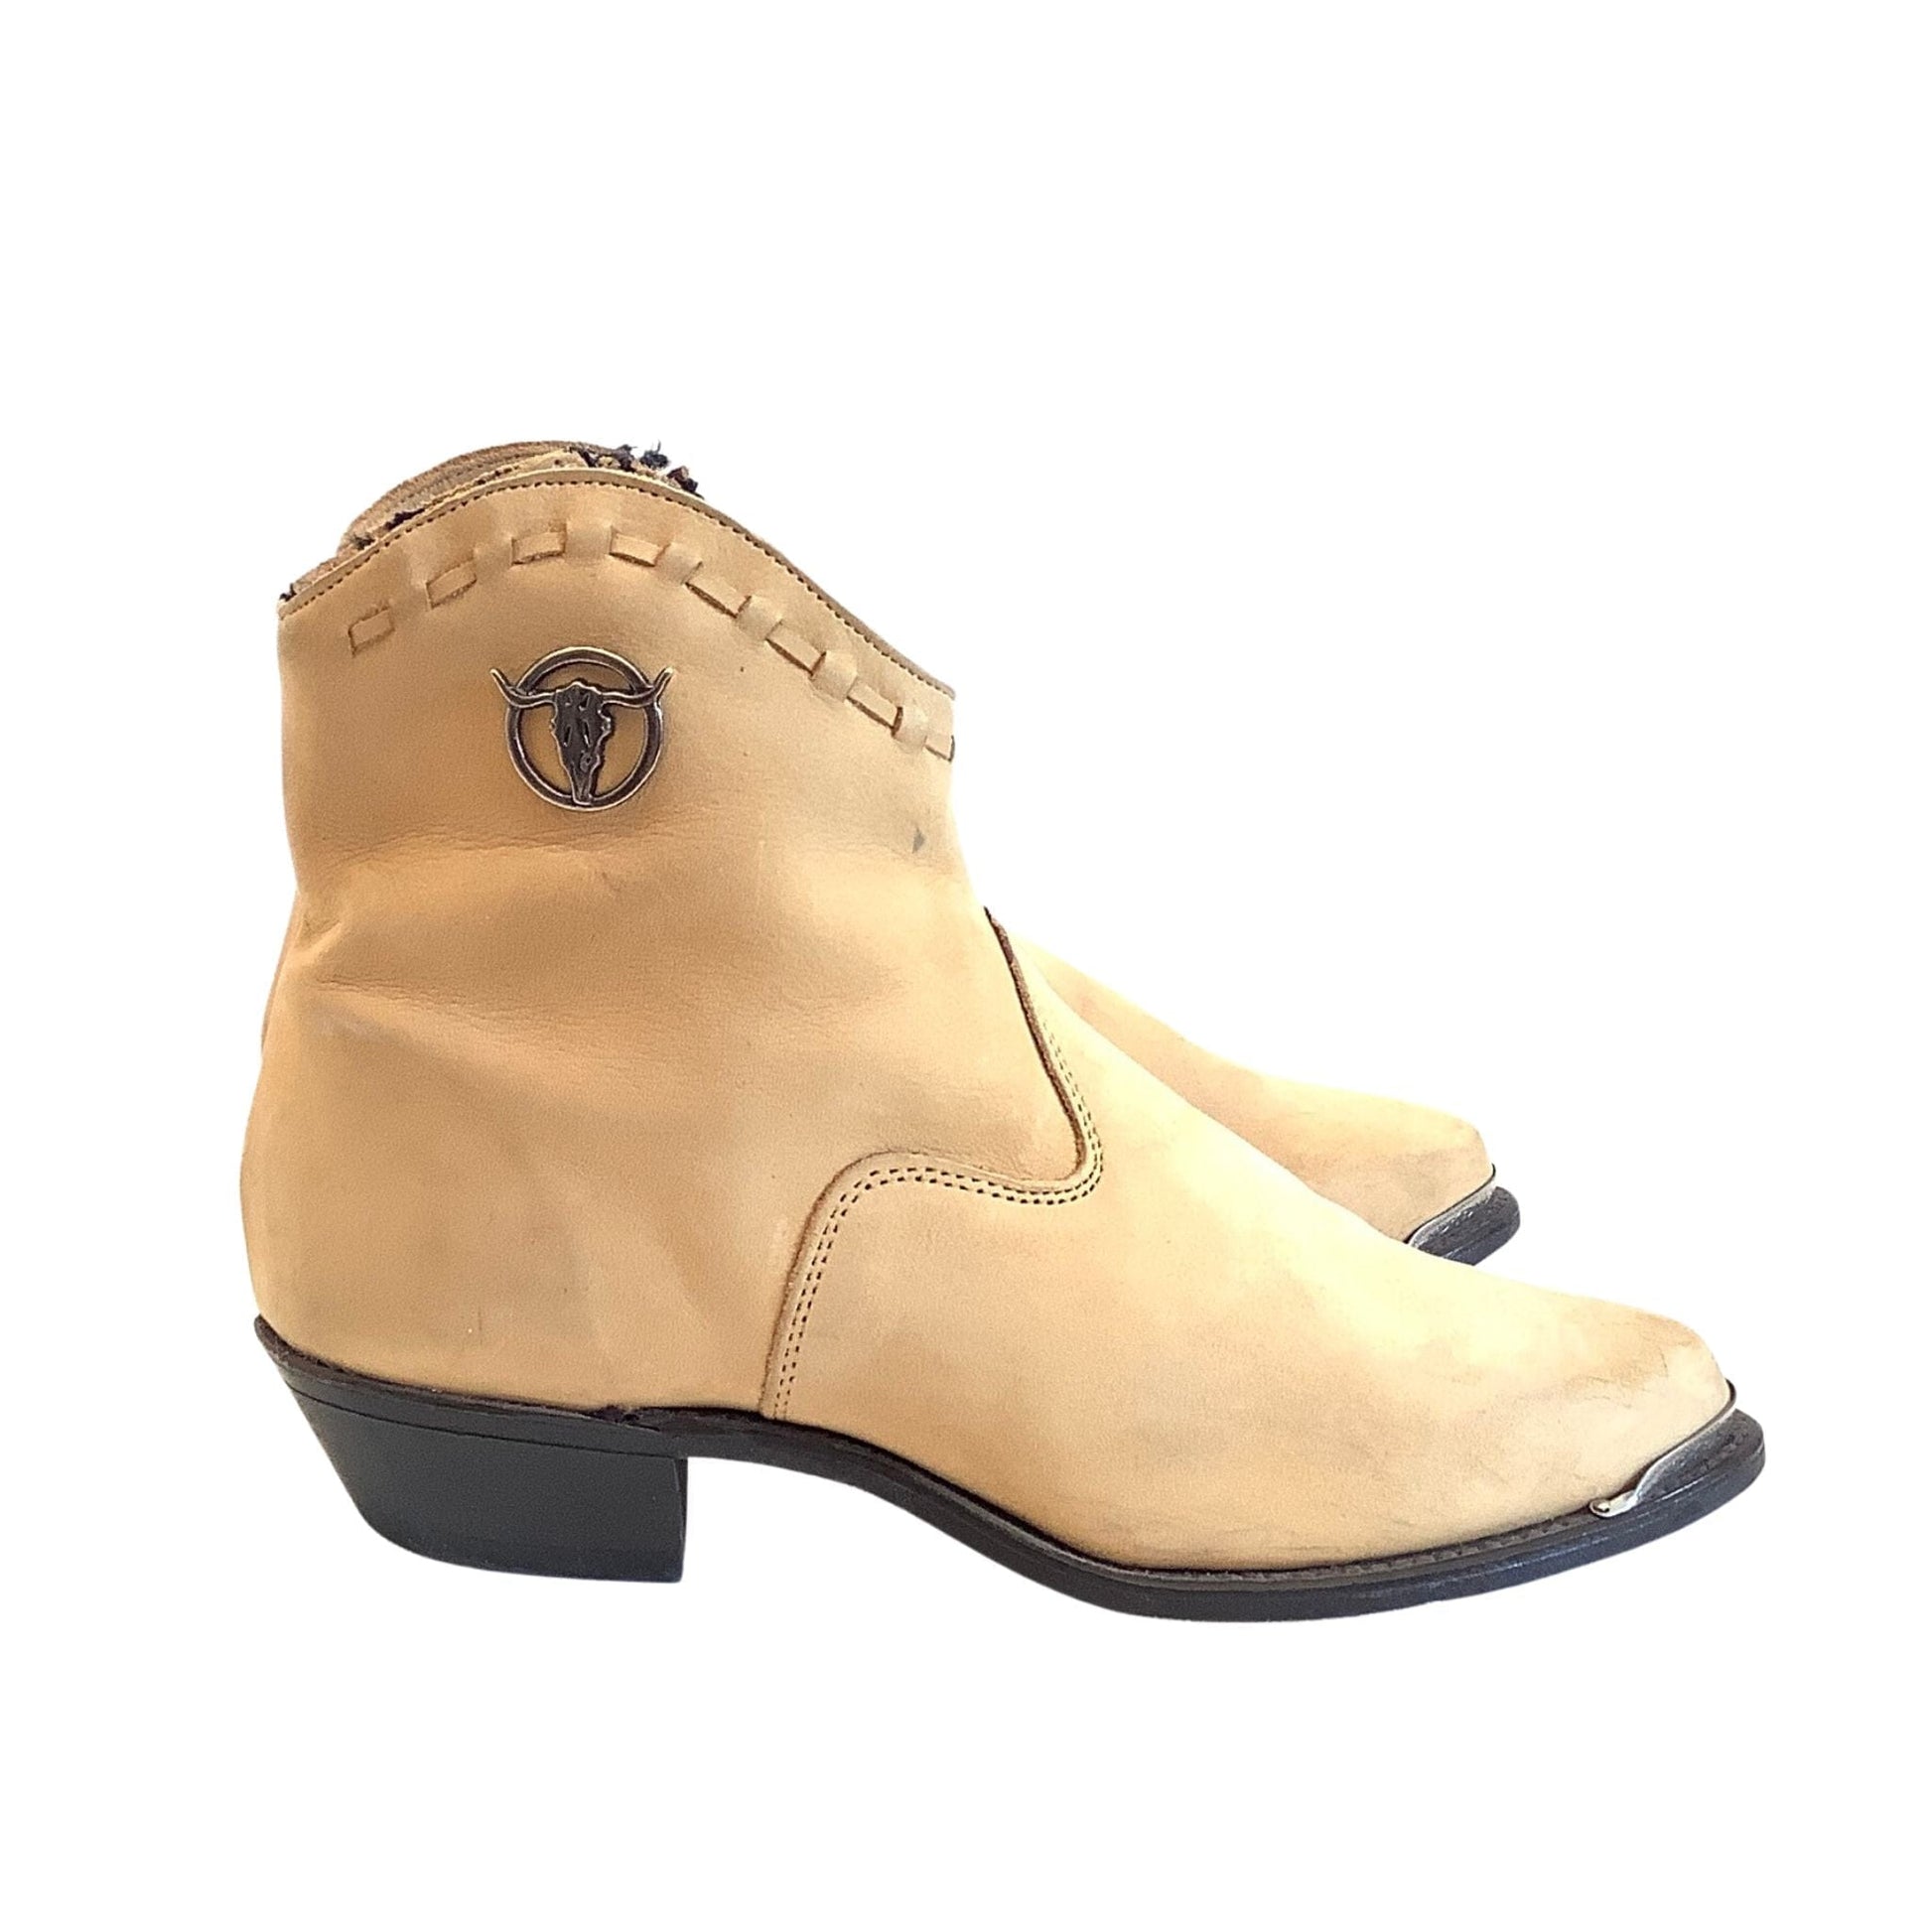 Vintage Cowboy Ankle Boots 8 / Tan / Y2K - Now